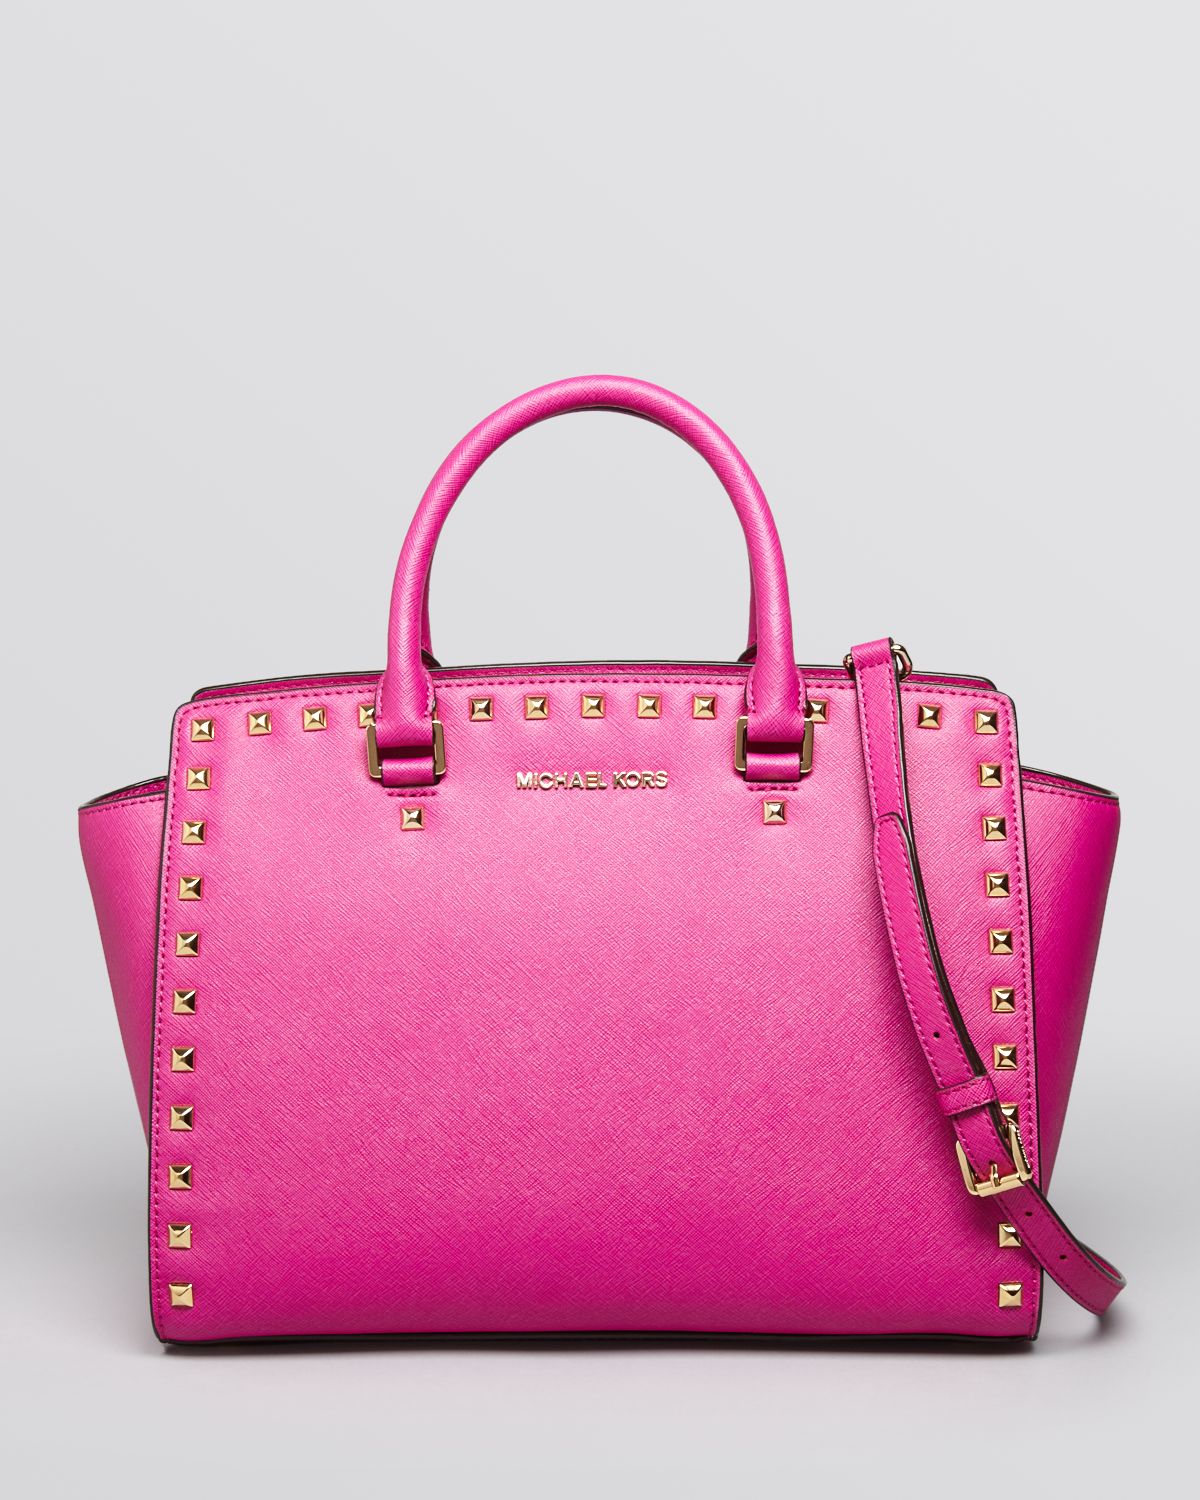 michael kors pink studded purse